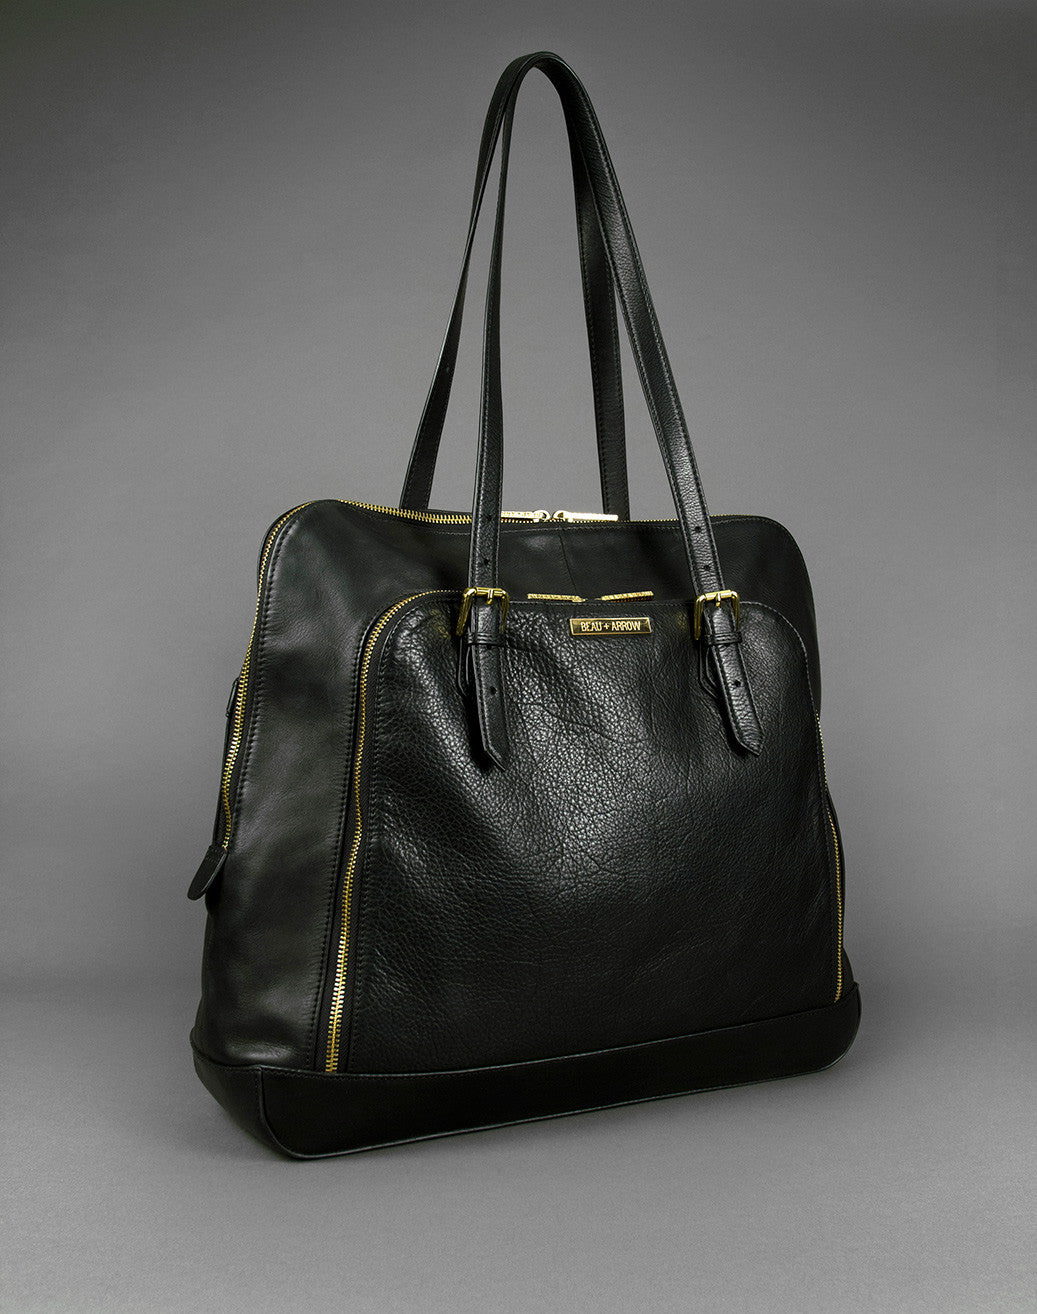 Concealed Carry Purse Review Hephaestus Tyche Handbag — Elegant Armed